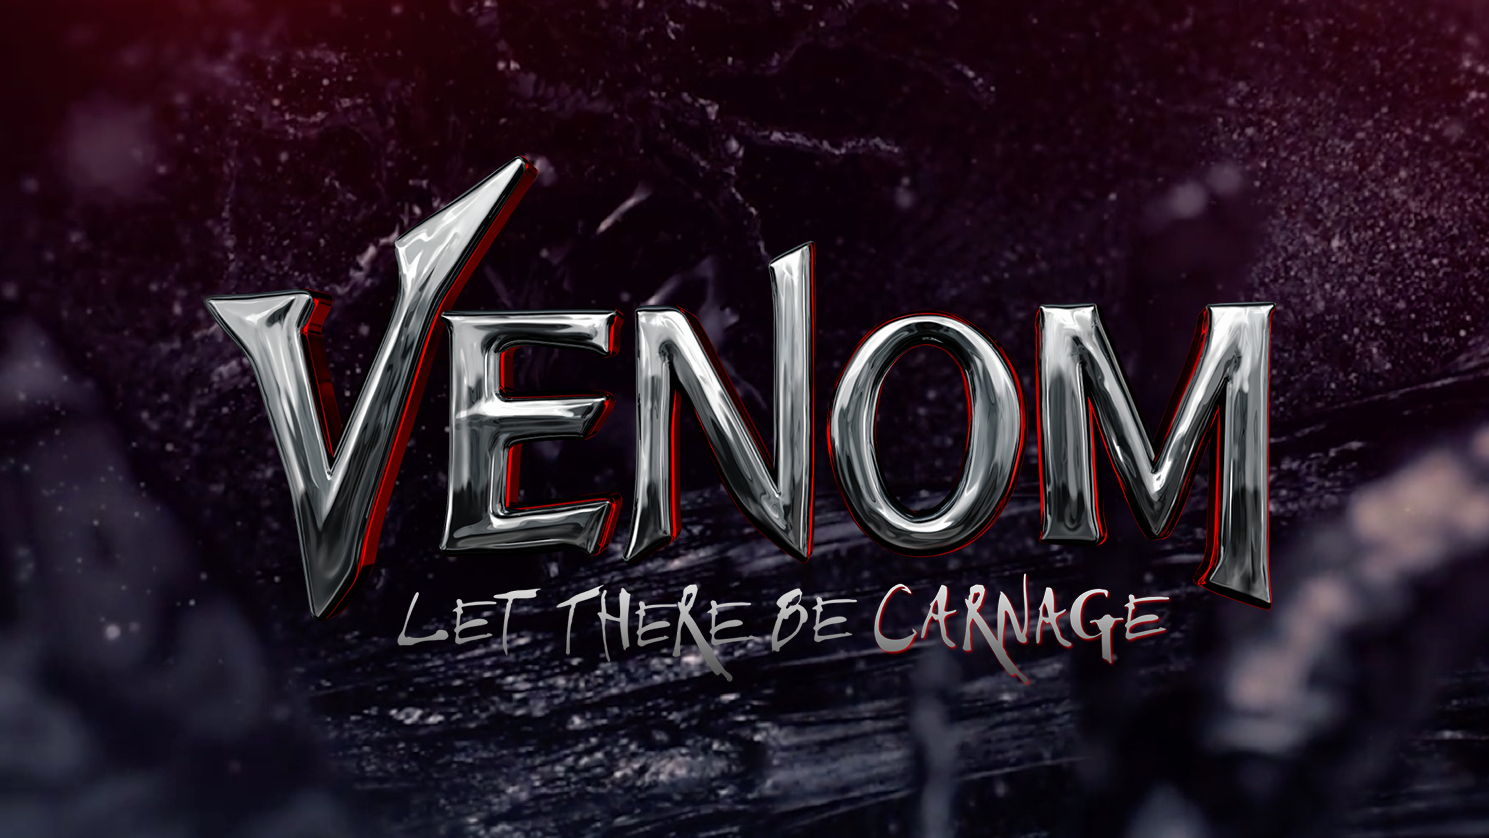 Вышел трейлер продолжения “Venom: Let There Be Carnage” / “Веном 2: Карнаж”